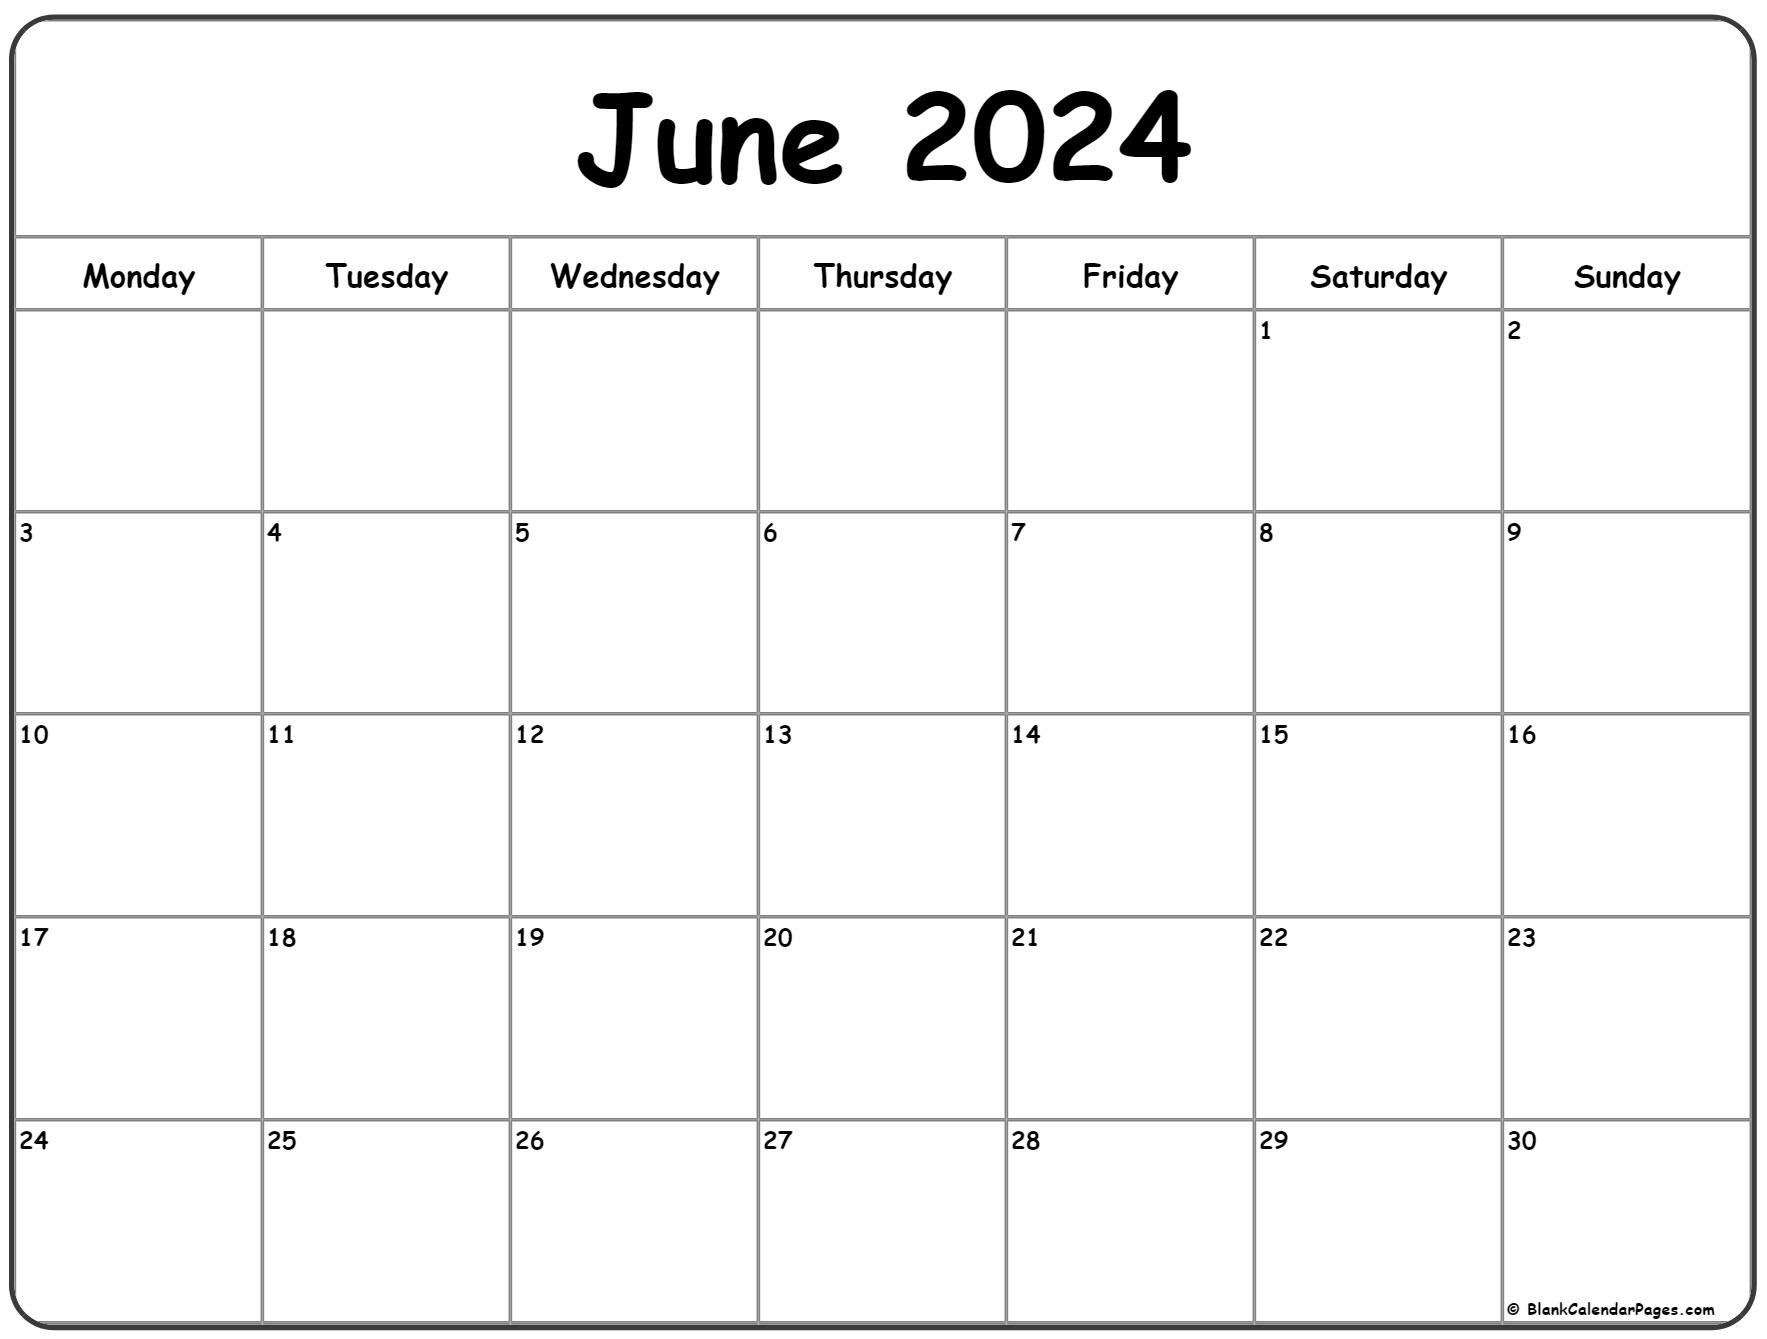 June 2024 Monday Calendar | Monday To Sunday for June 2024 Weekly Calendar